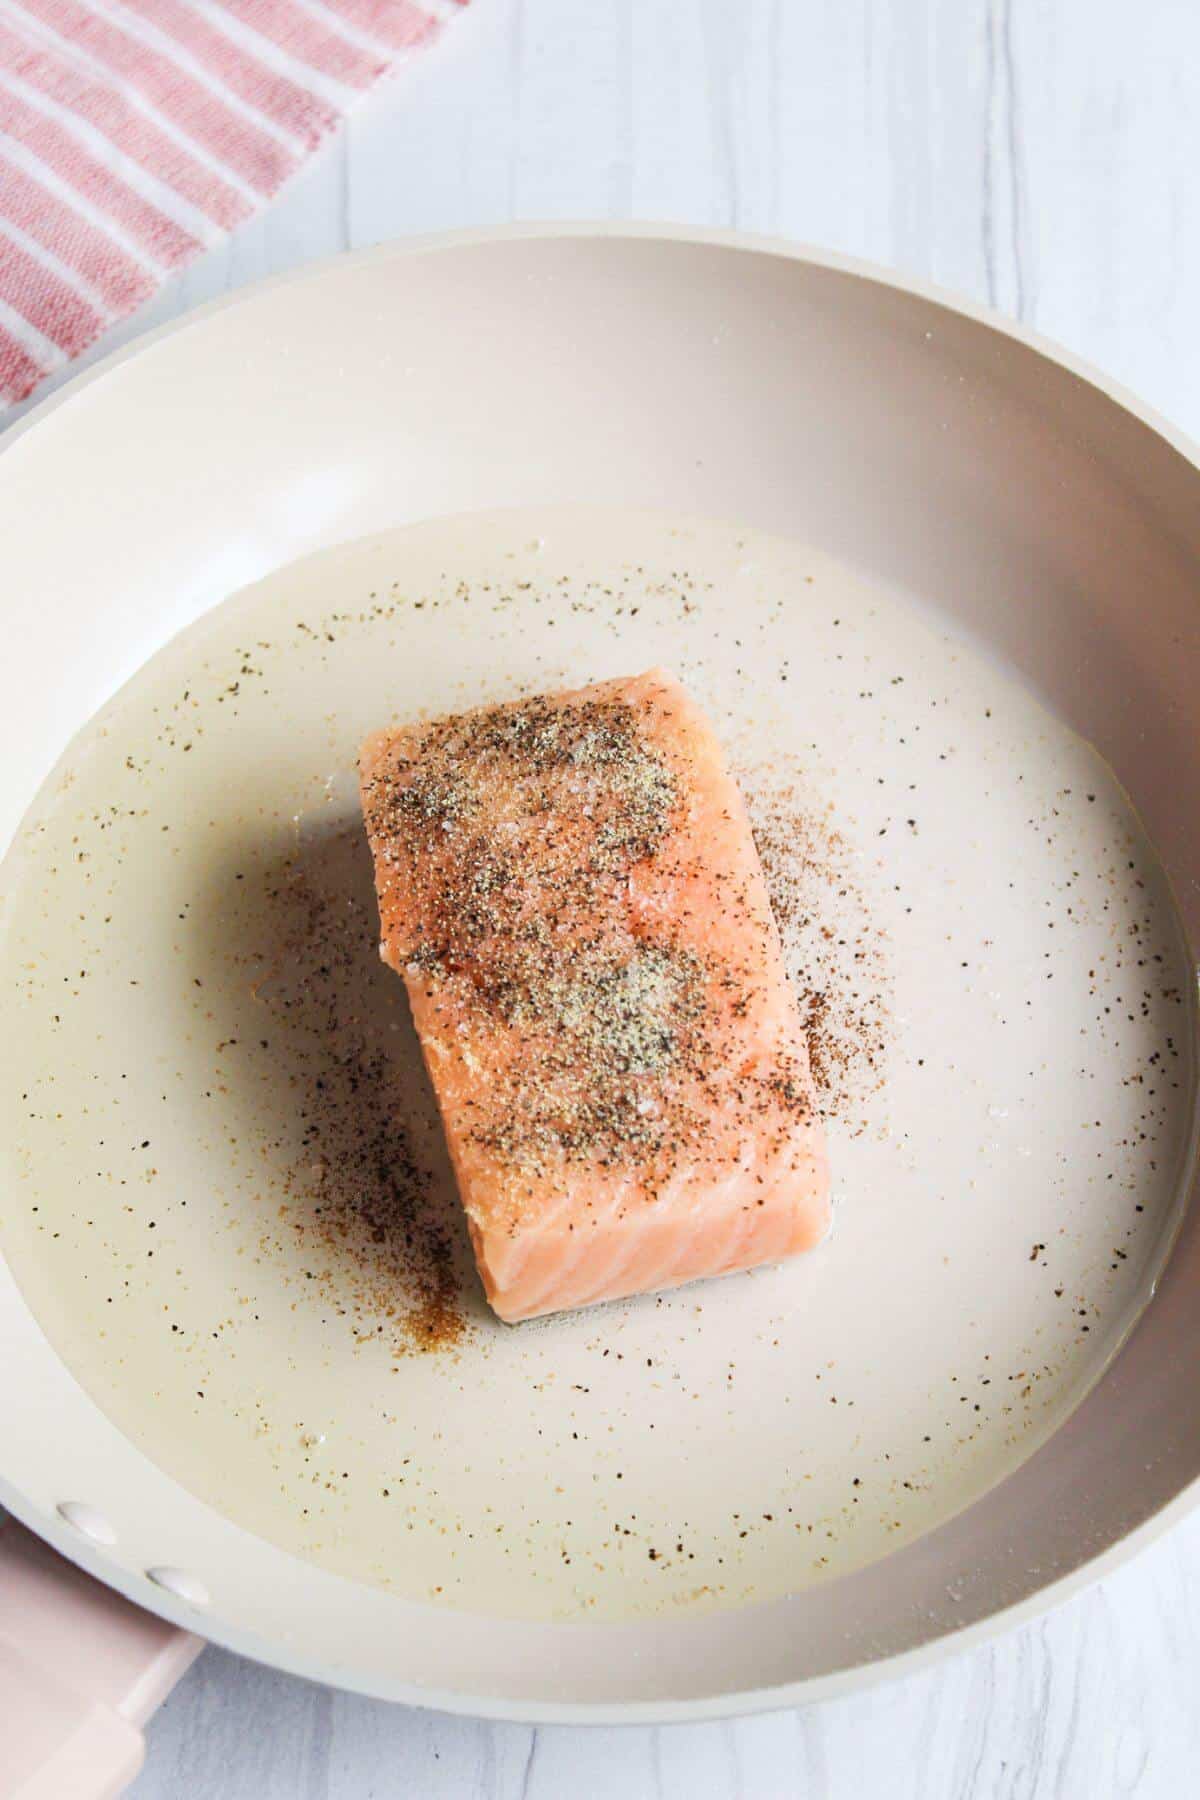 Seasoned salmon fillet in hot skillet.